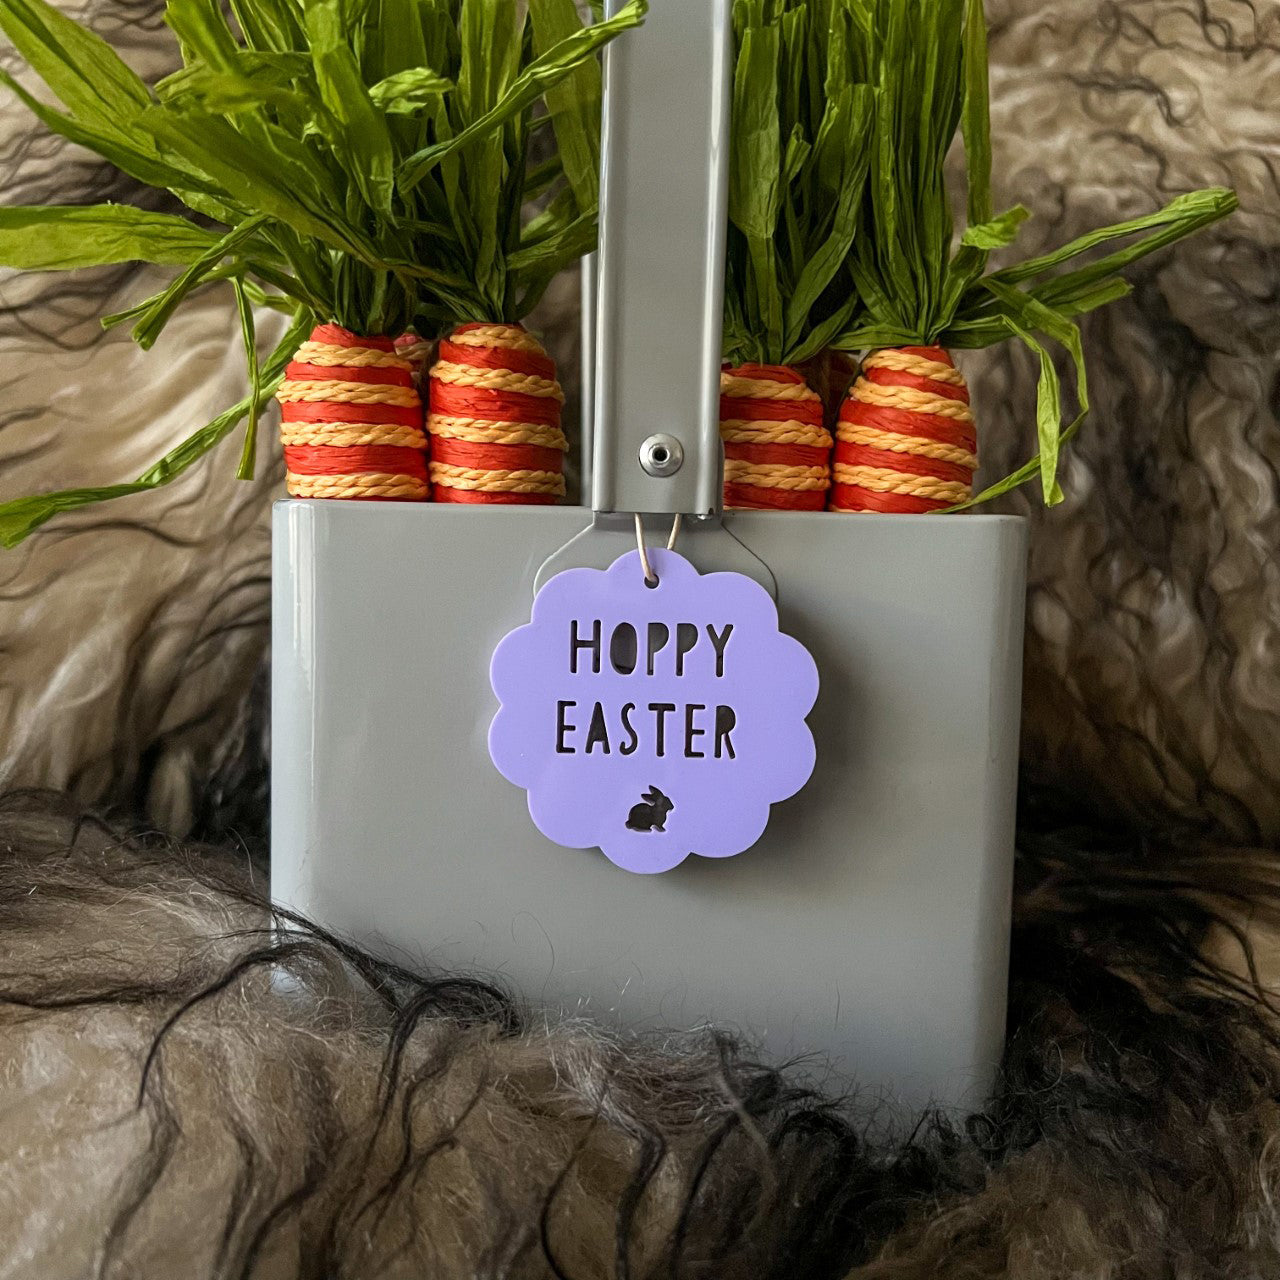 Daisy Hoppy Easter Tags